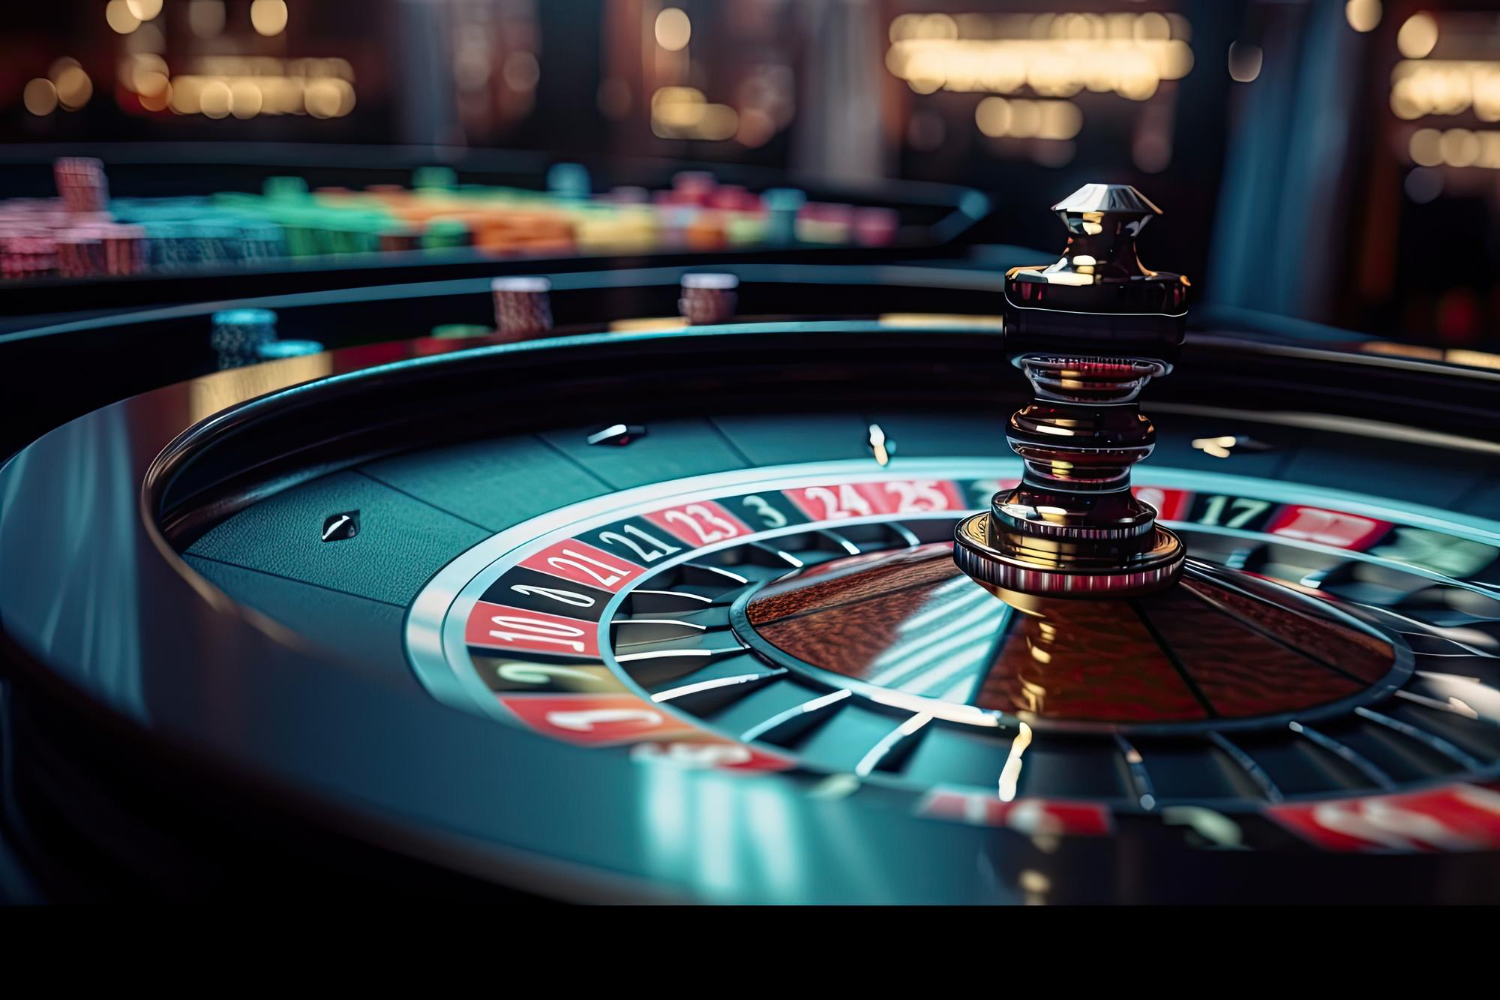 casino-roulette-wheel-close-up-ai-generative